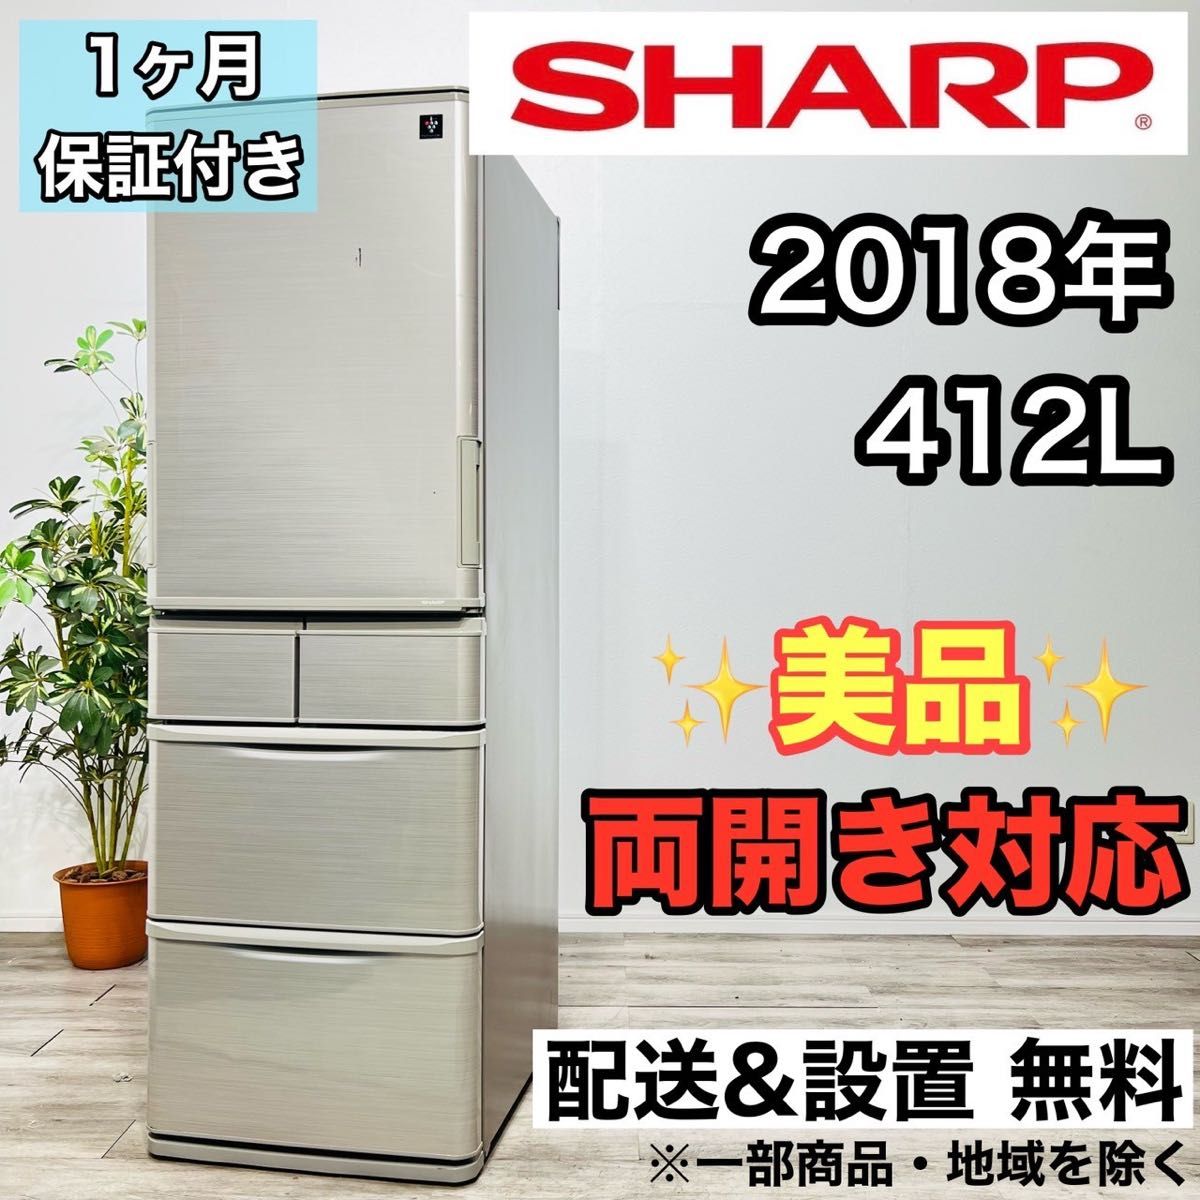 SHARP a2081 5ドア冷蔵庫 412L 2018年製 18